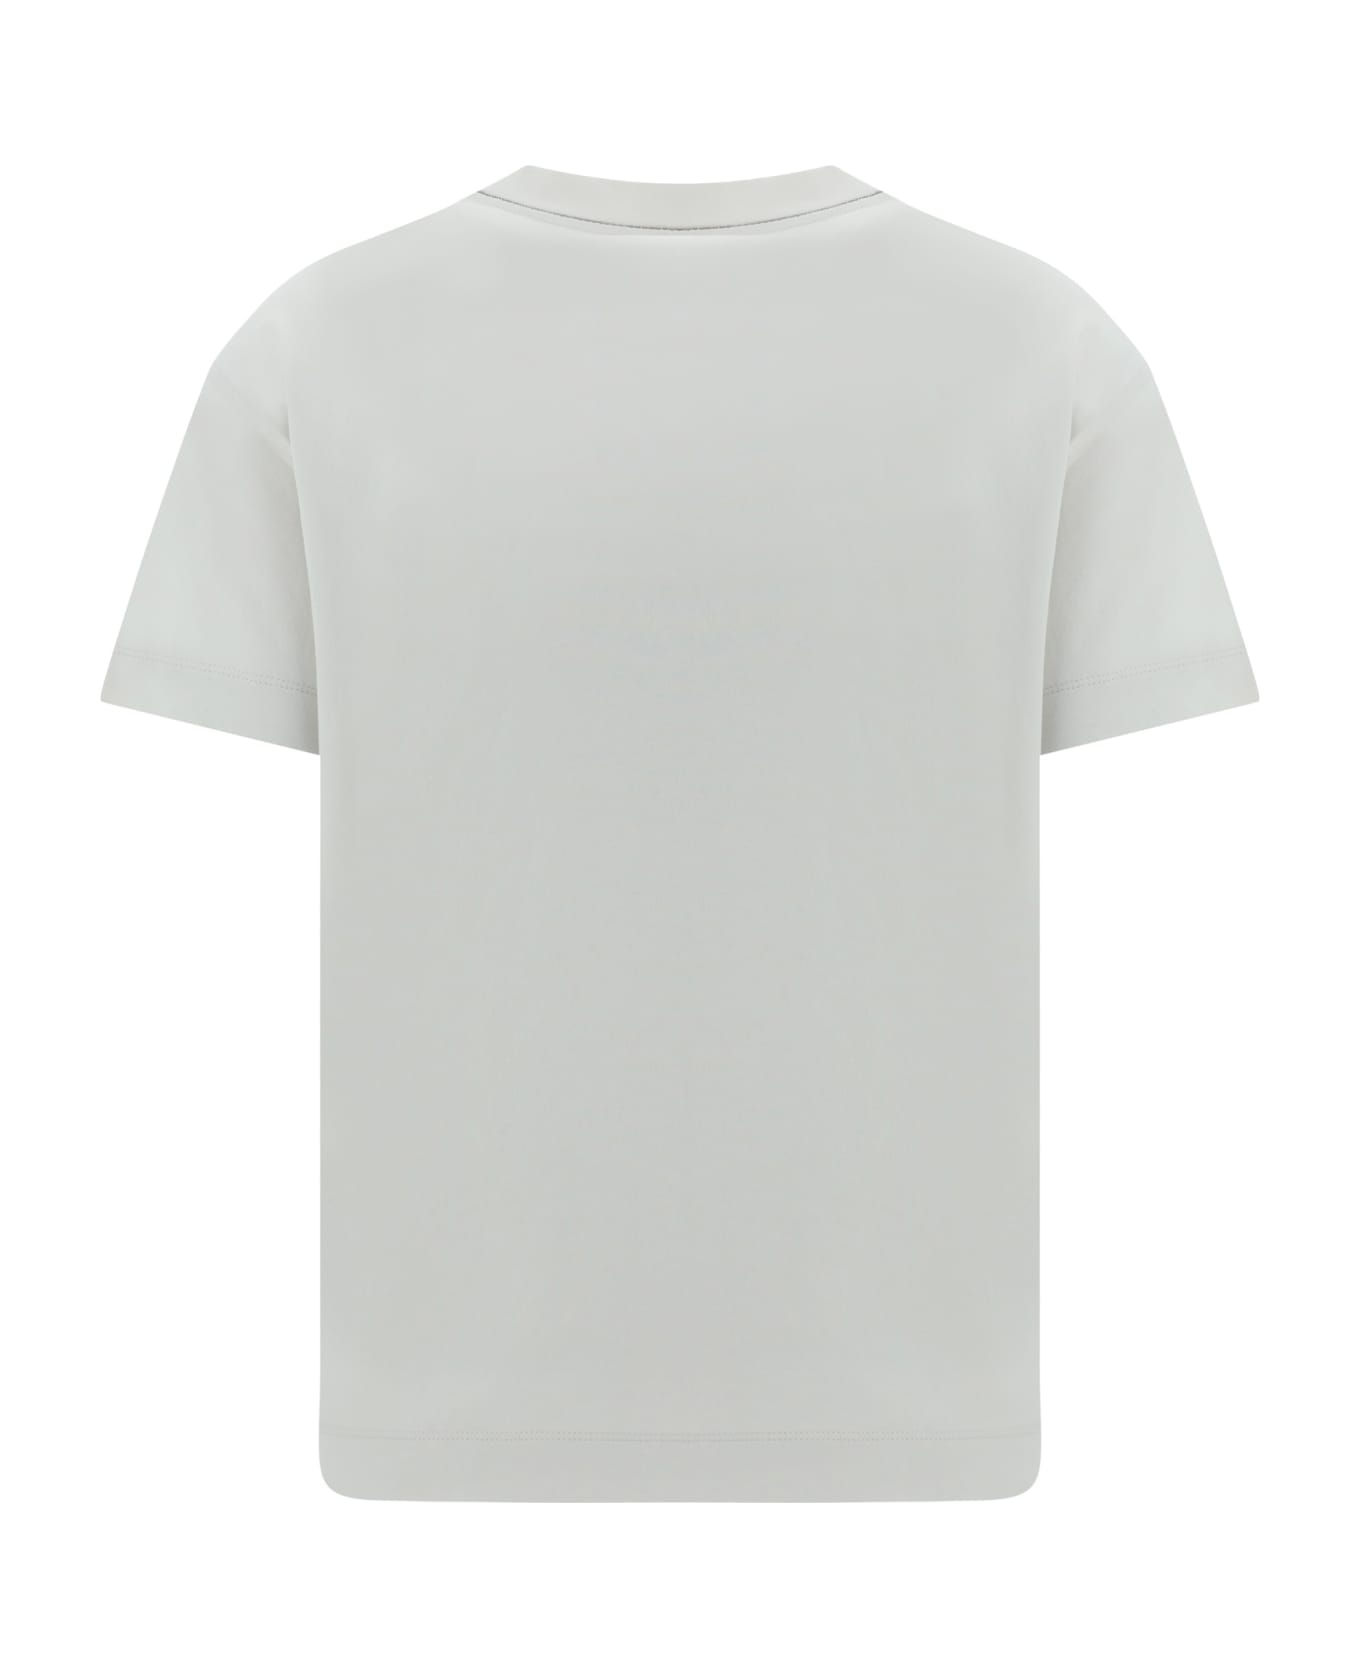 Brunello Cucinelli Touched Nature Logo T-shirt - Warm White